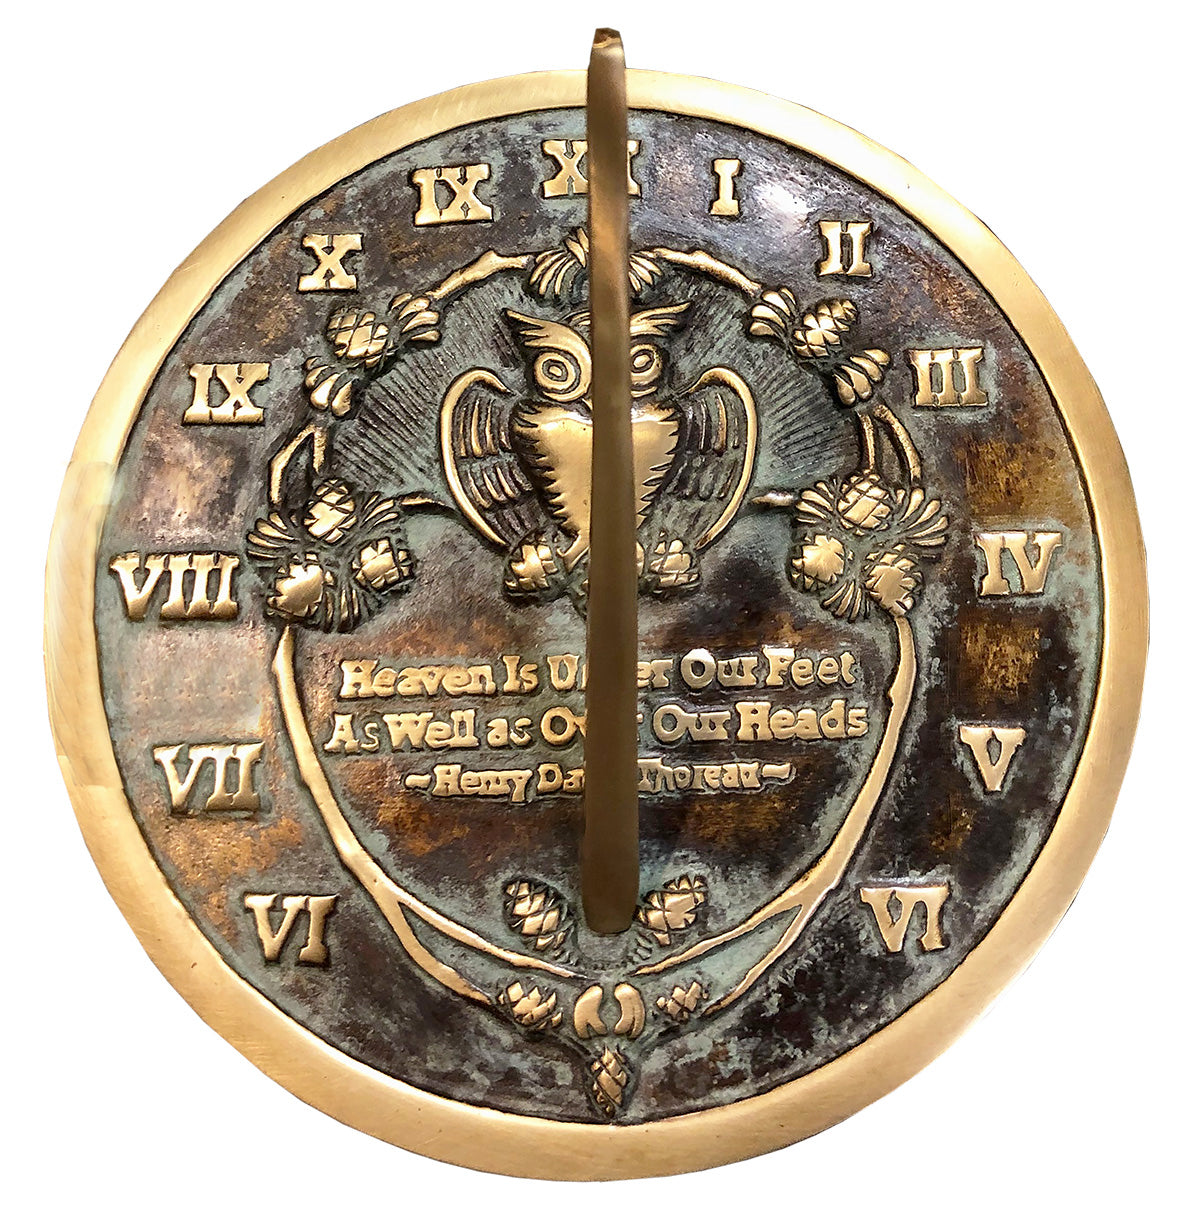 Solid Brass Thoreau Sundial, 8.5" dia Rome #2329